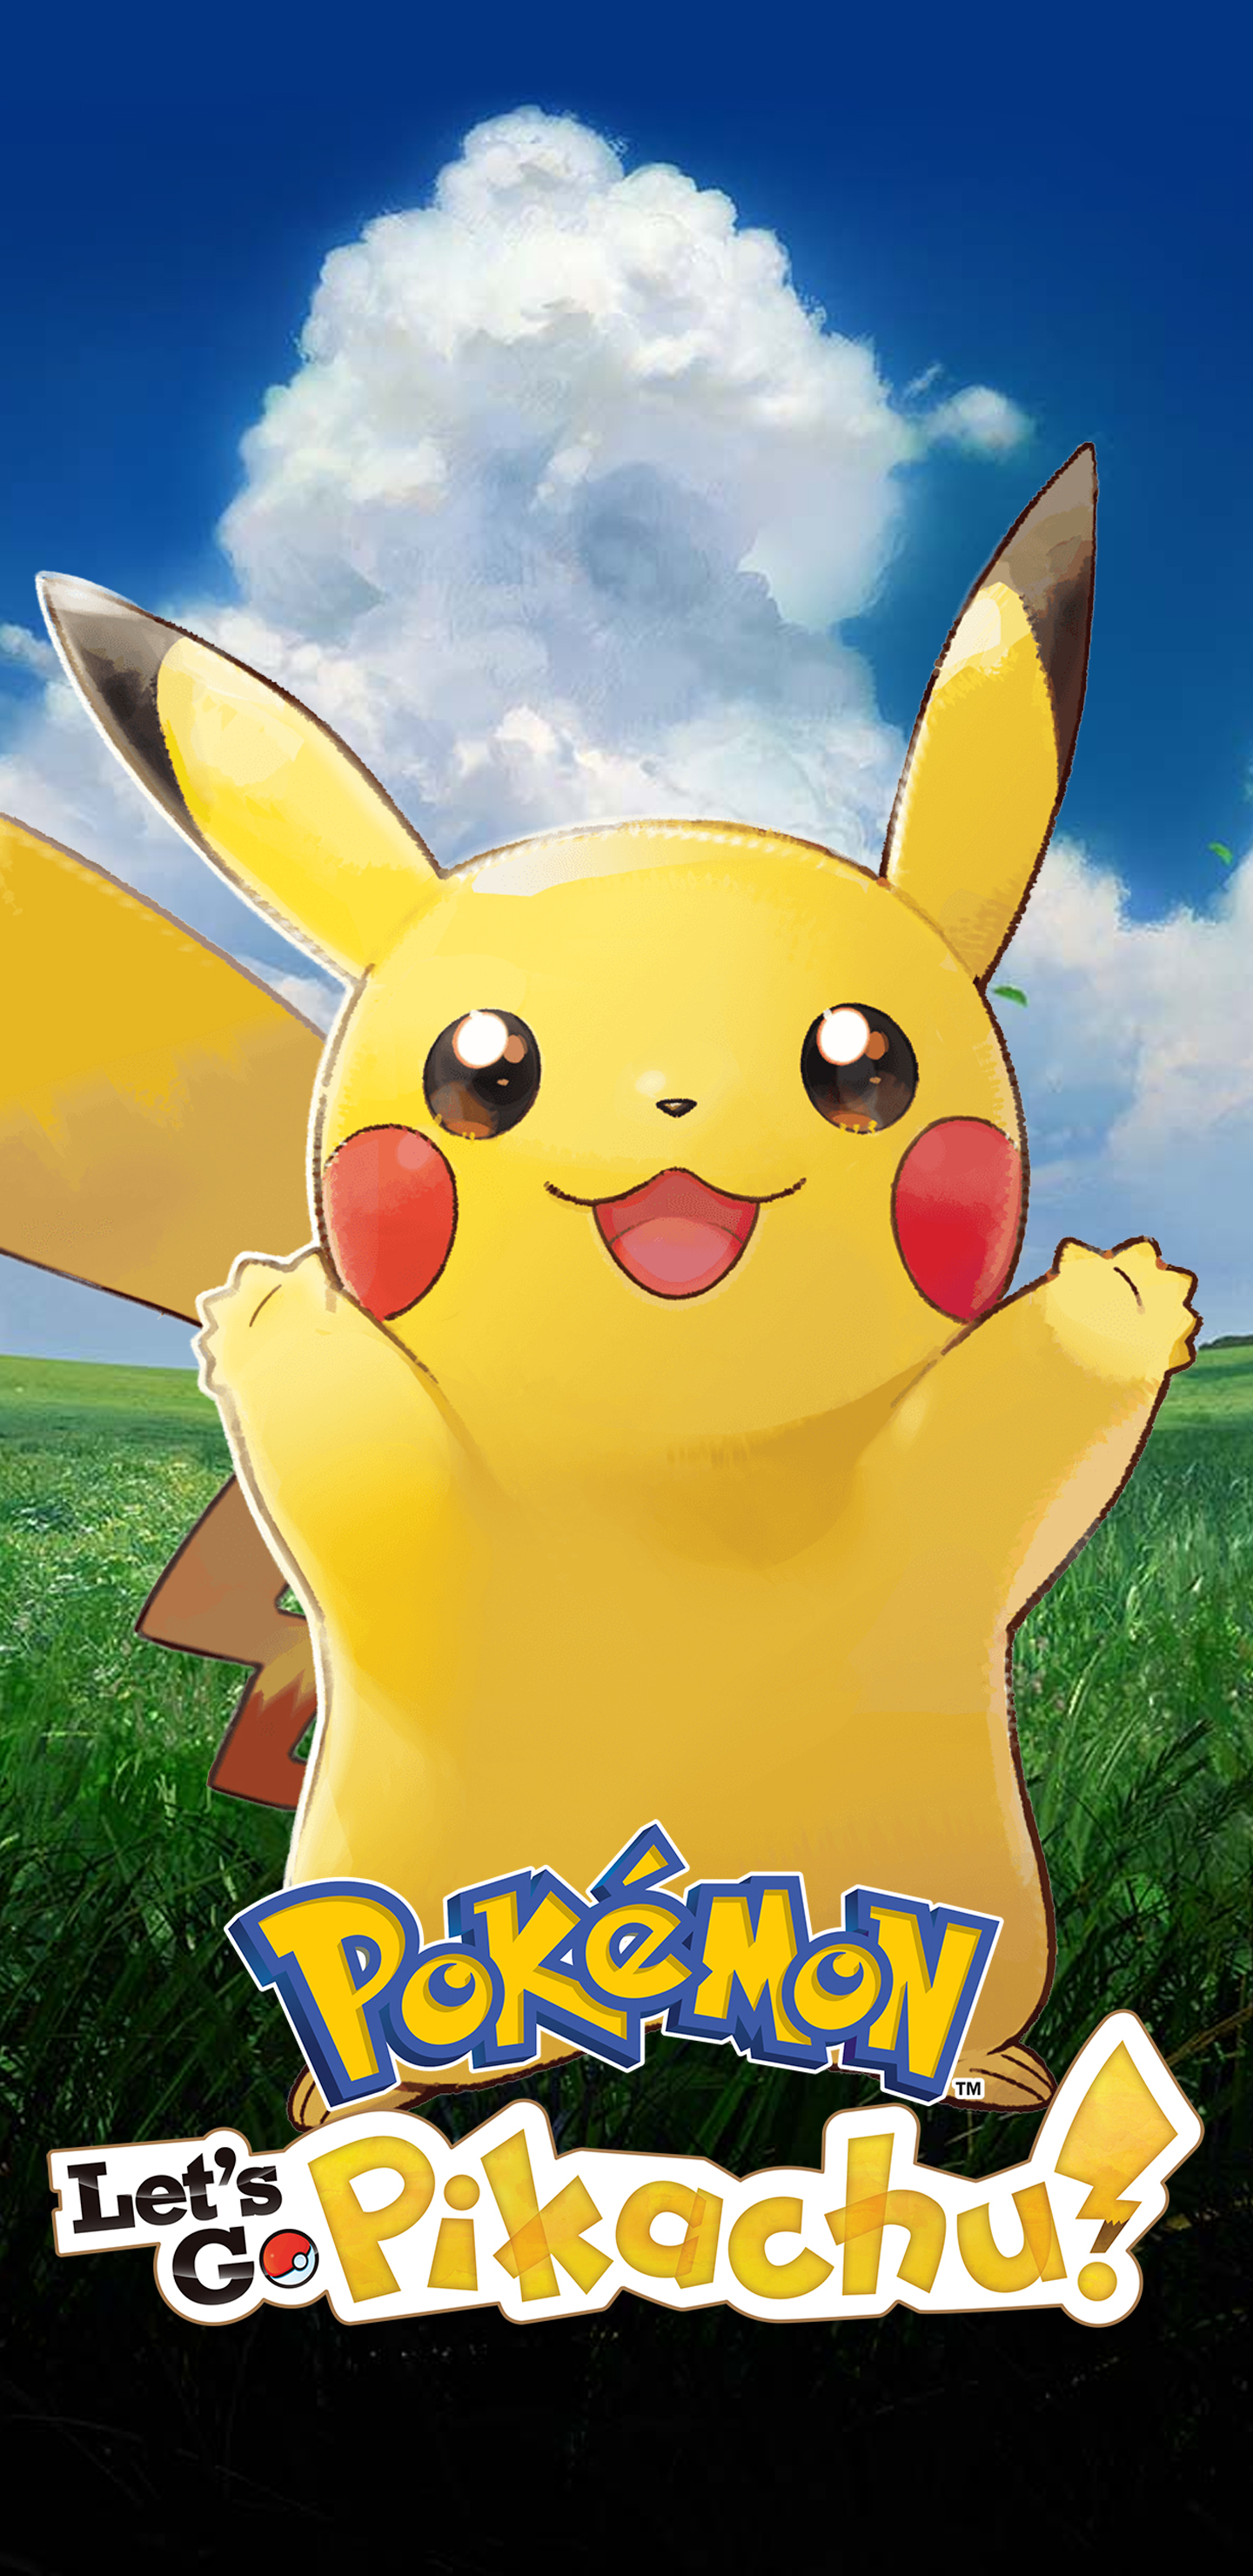 Mobile - Pokemon Let's Go Pikachu , HD Wallpaper & Backgrounds